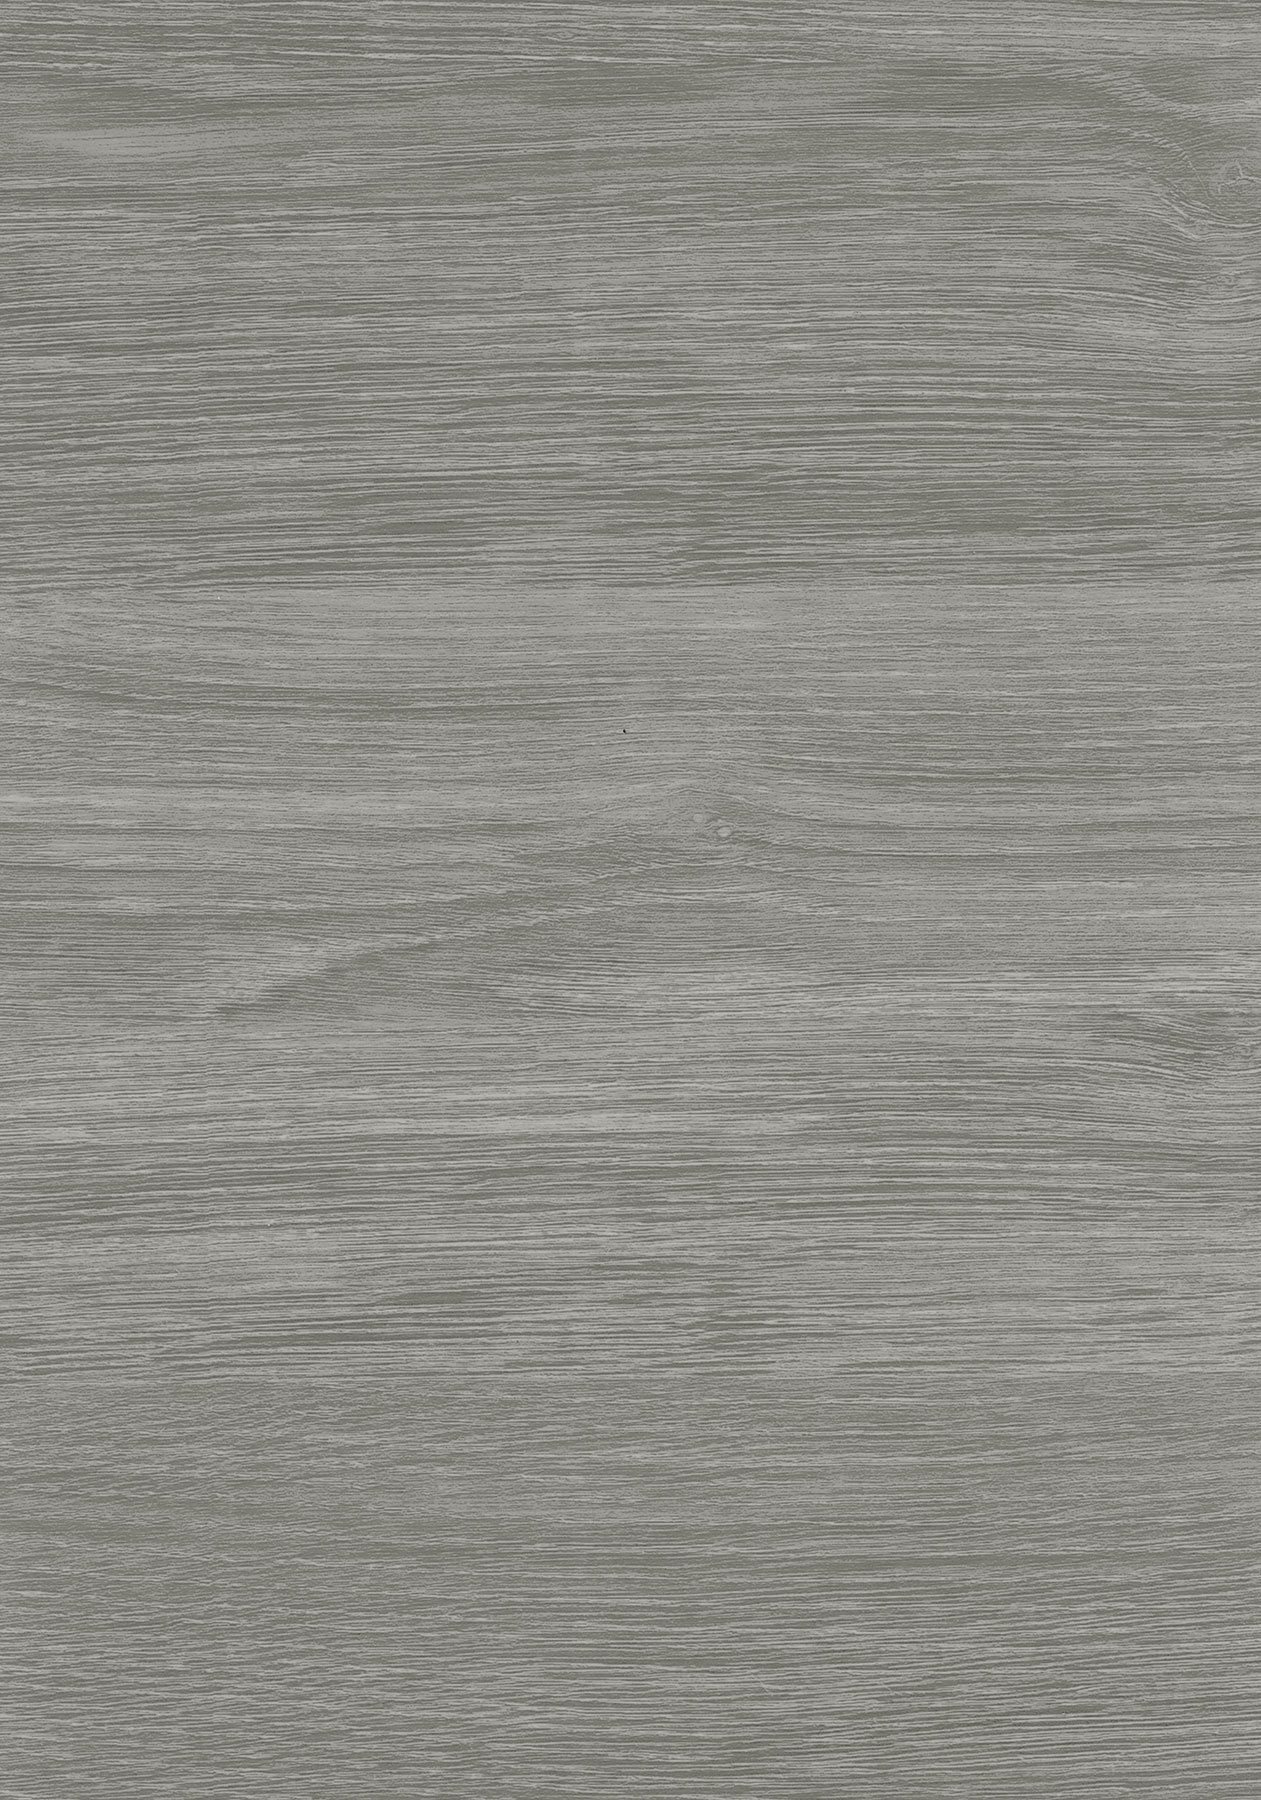 1036 Woodec-sheffield oak concrete